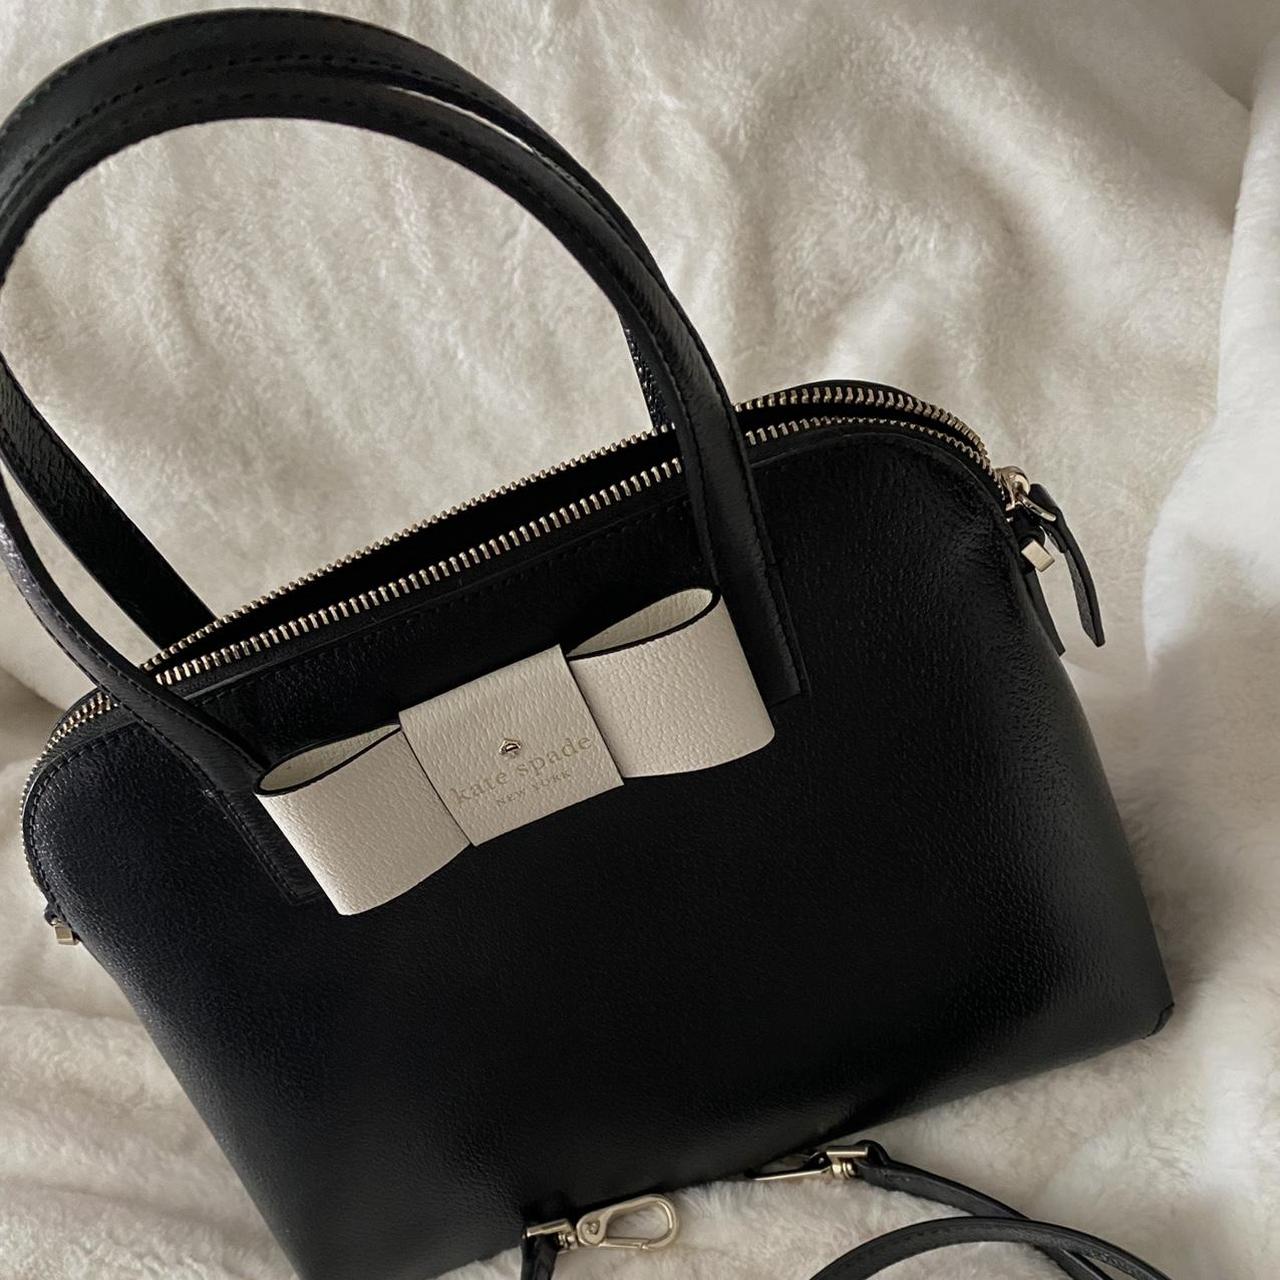 Kate Spade New York Women's Black and Cream Bag | Depop